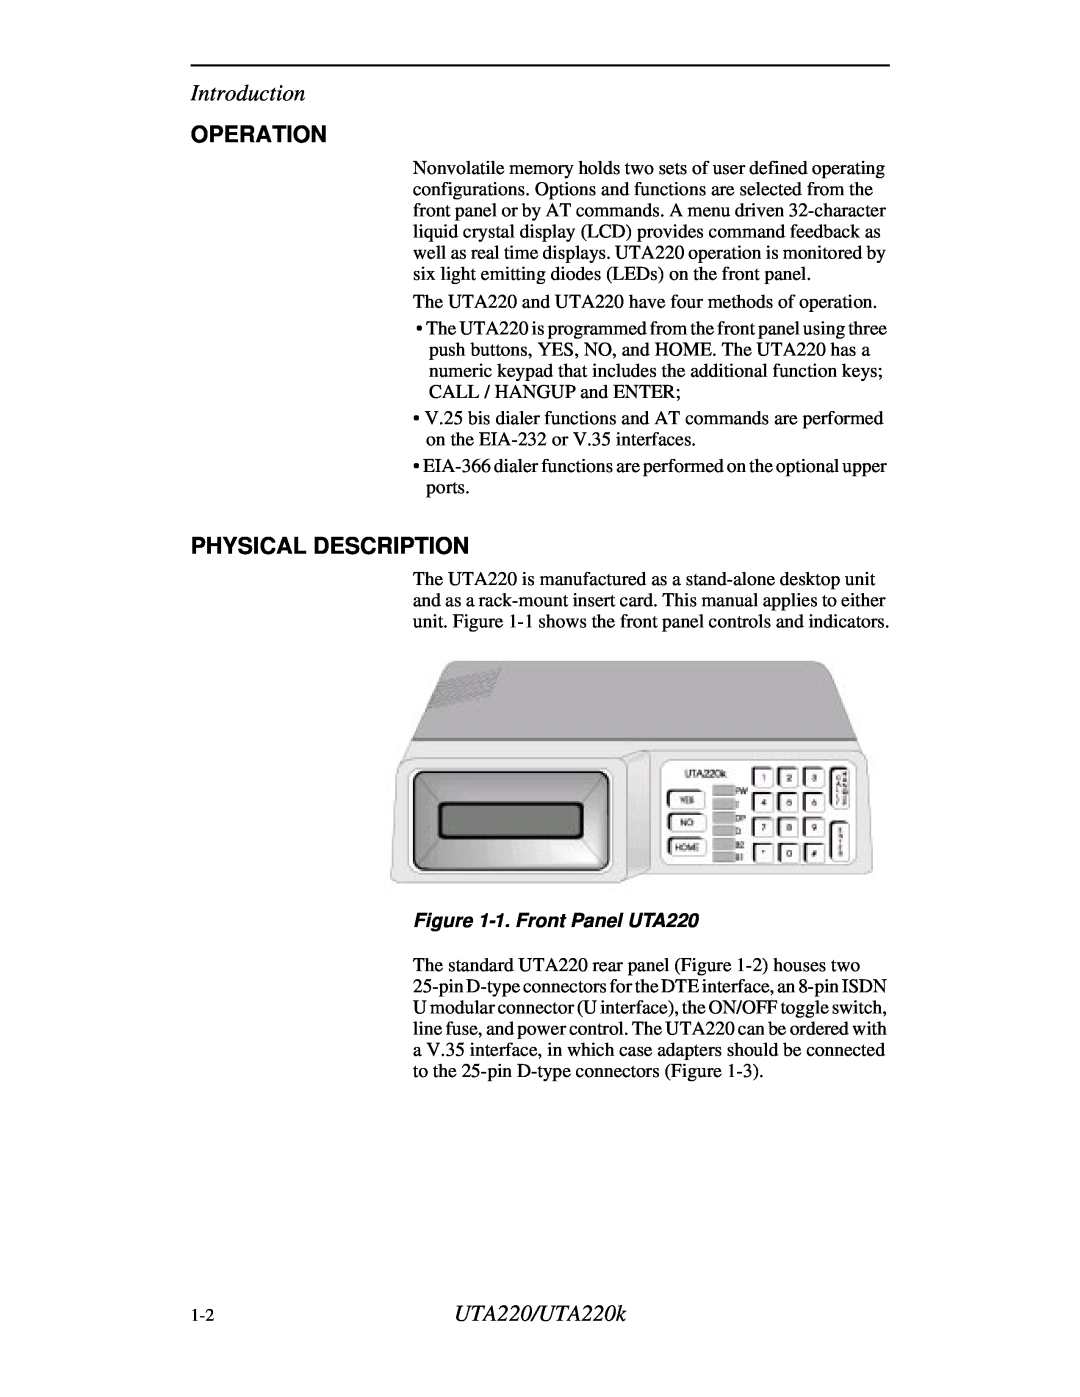 Northern UTA220/UTA220k manual Operation, Physical Description, 1. Front Panel UTA220, Introduction 